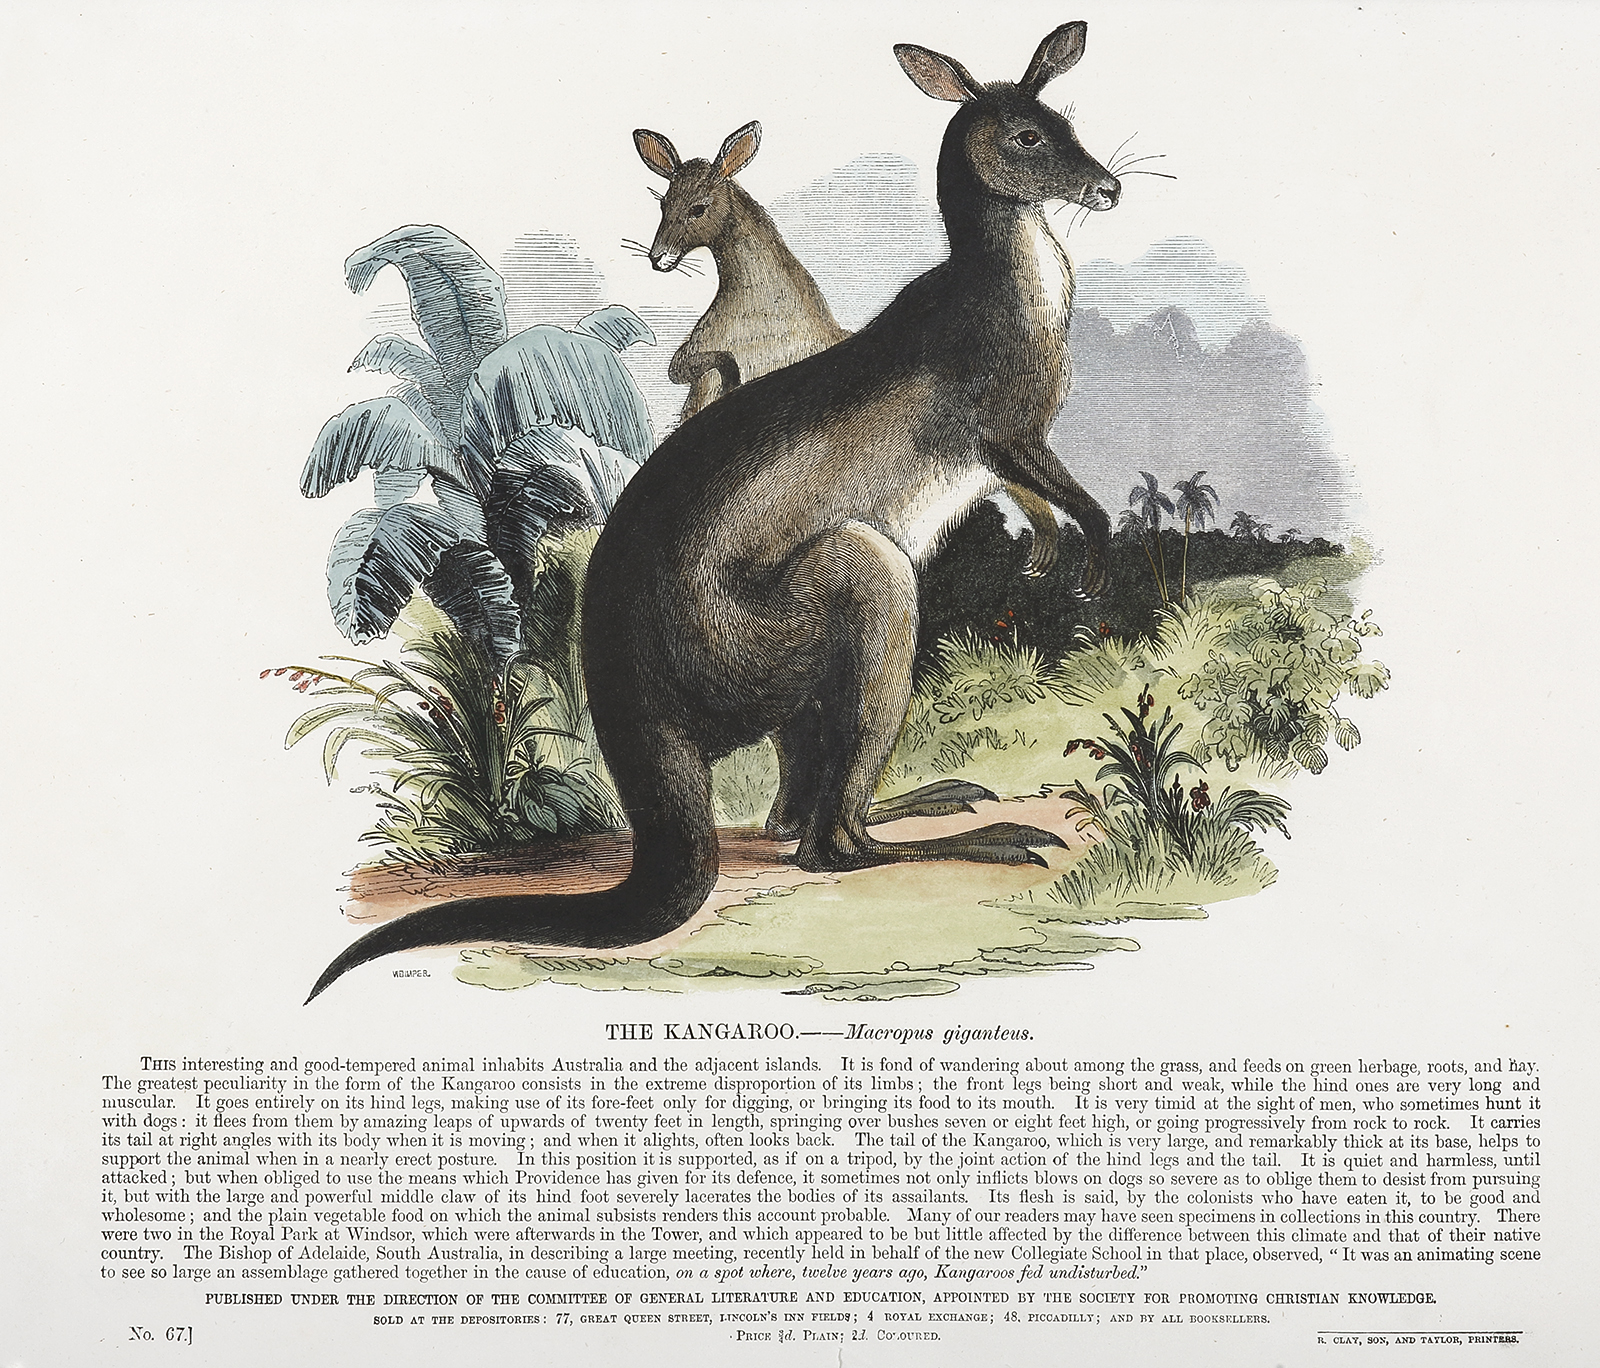 The Kangaroo. - Macropus giganteus. - Antique Print from 1877